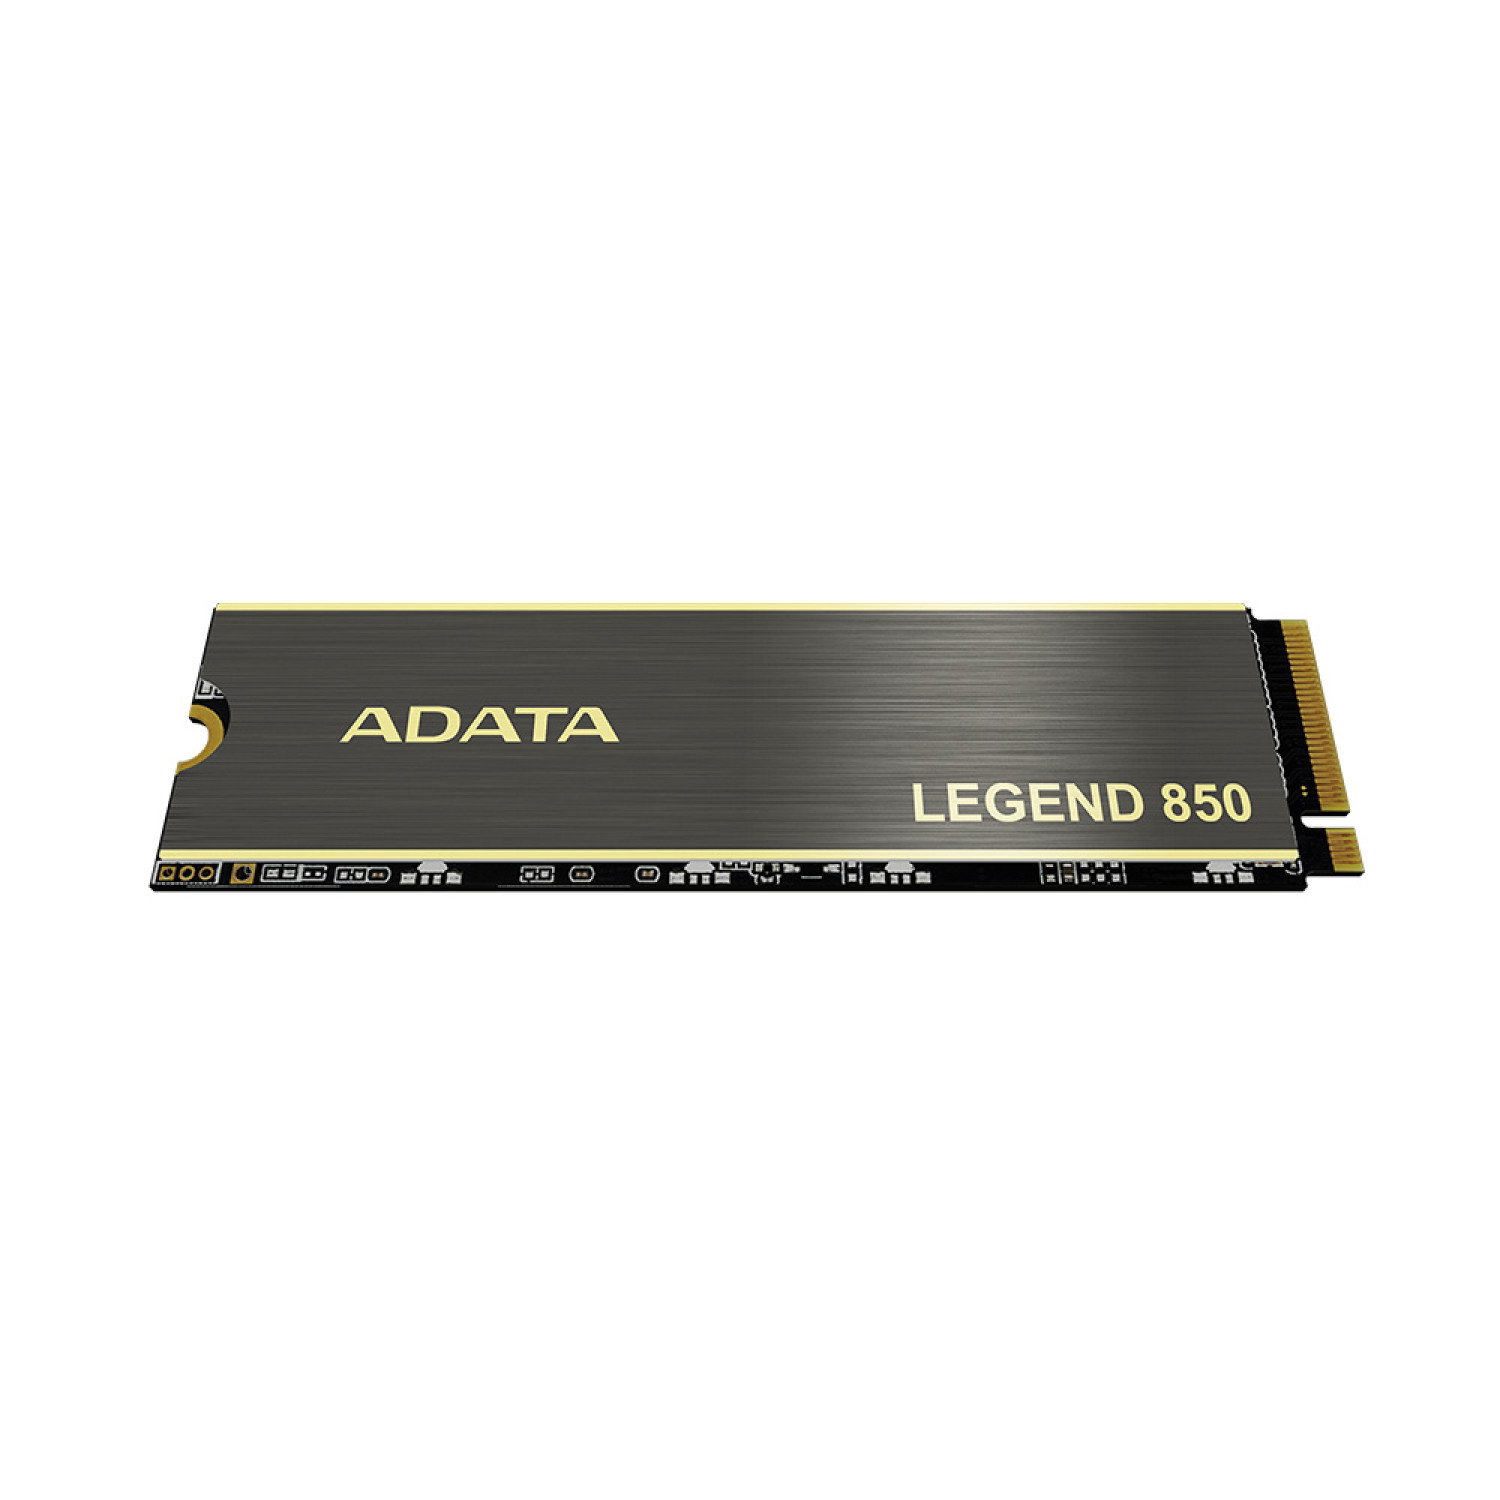 حافظه اس اس دی ADATA Legend 850 512GB - for PS5-4